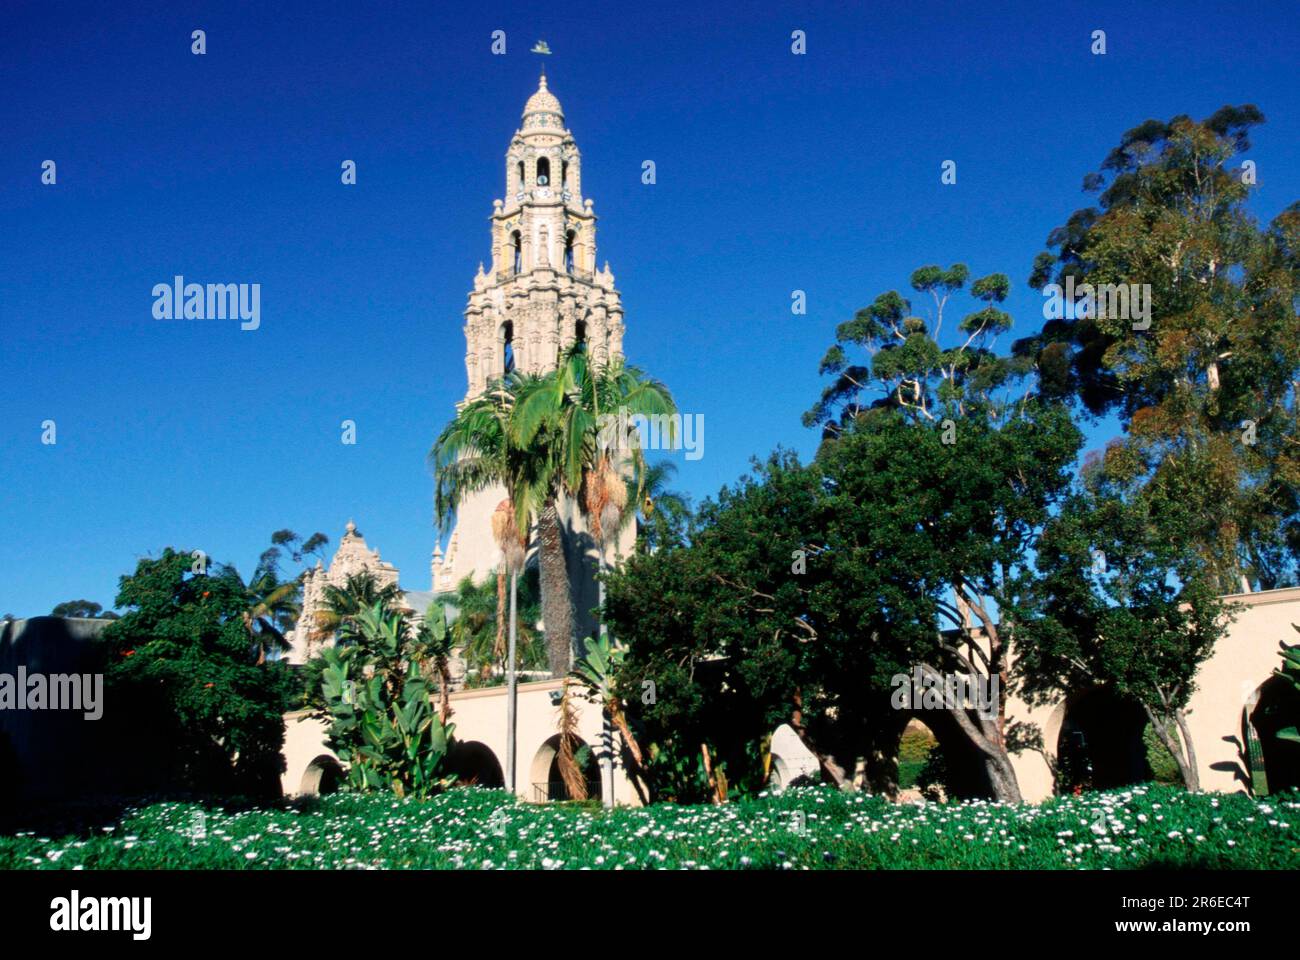 Balboa Park, Sand Diego, California/California, USA, north america (north america), landscape format, horizontal Stock Photo